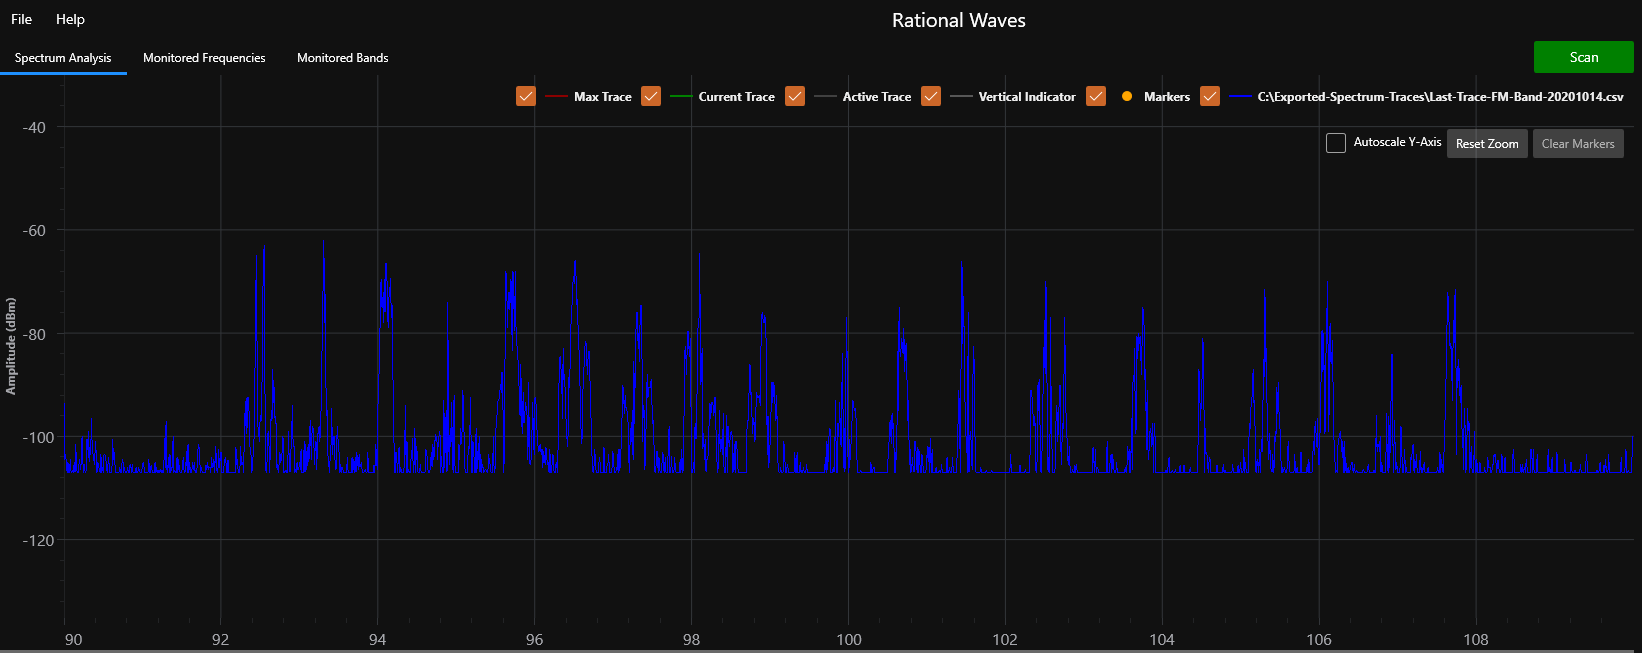 Rational Waves RF Spectrum Analysis Software